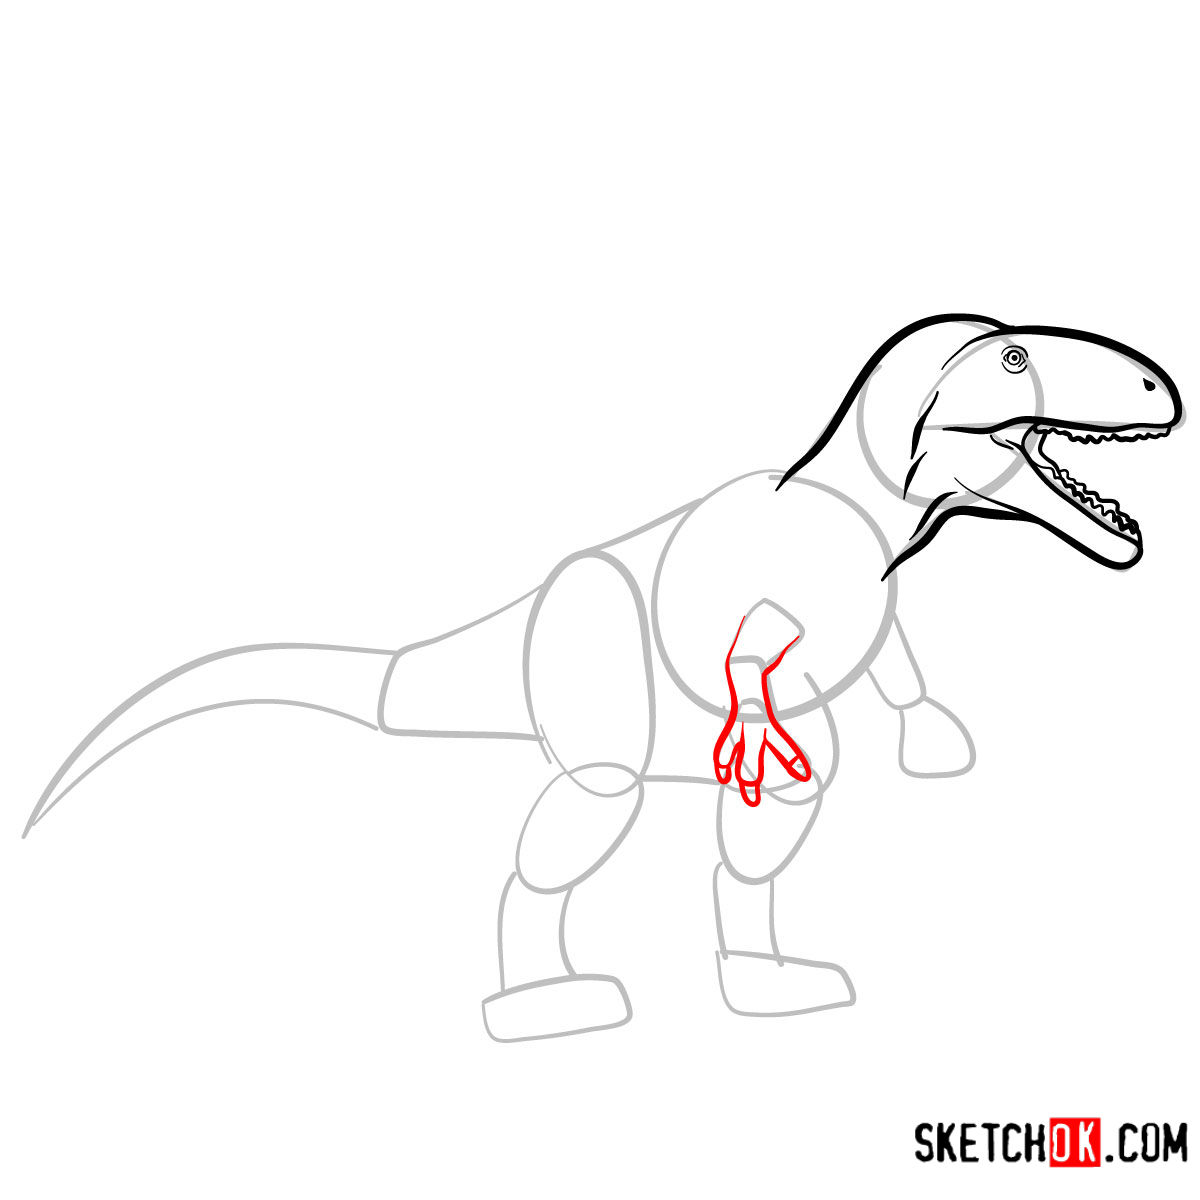 How to draw a Carcharodontosaurus | Extinct Animals - step 06